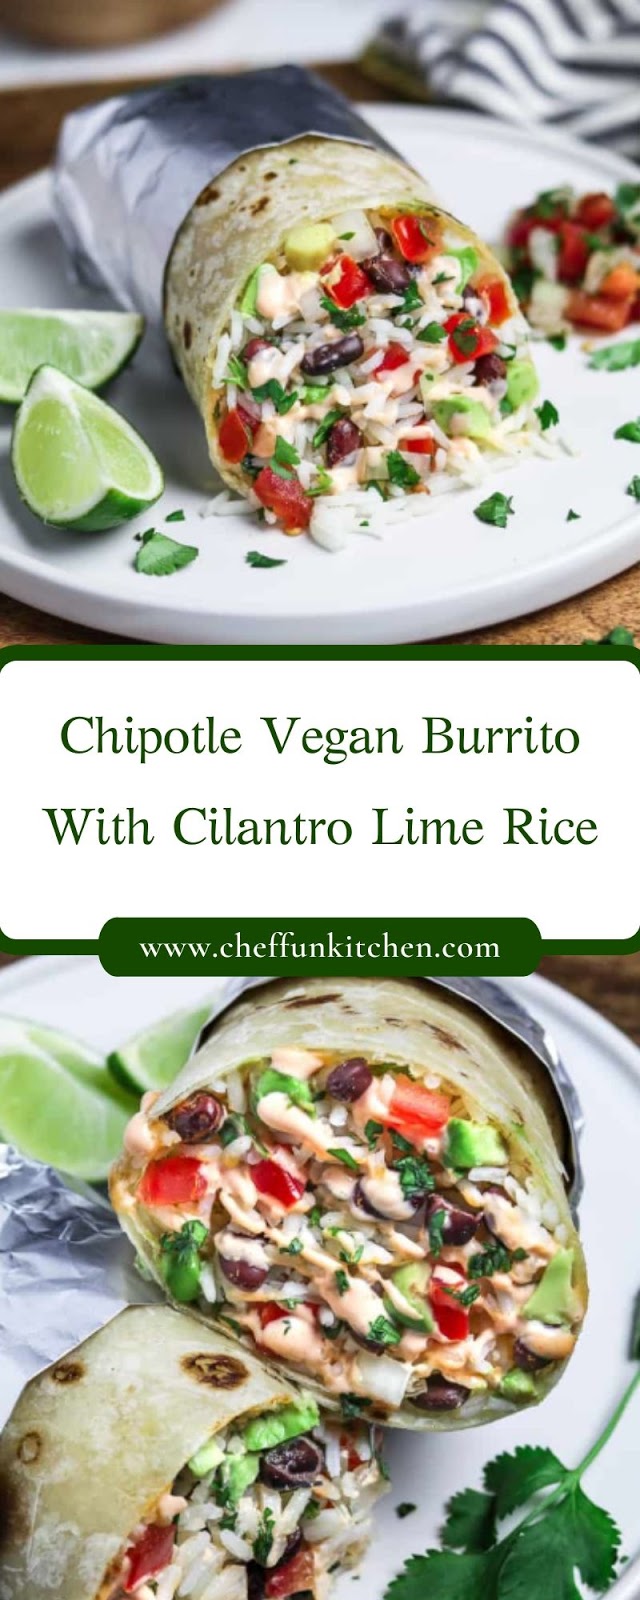 Chipotle Vegan Burrito With Cilantro Lime Rice